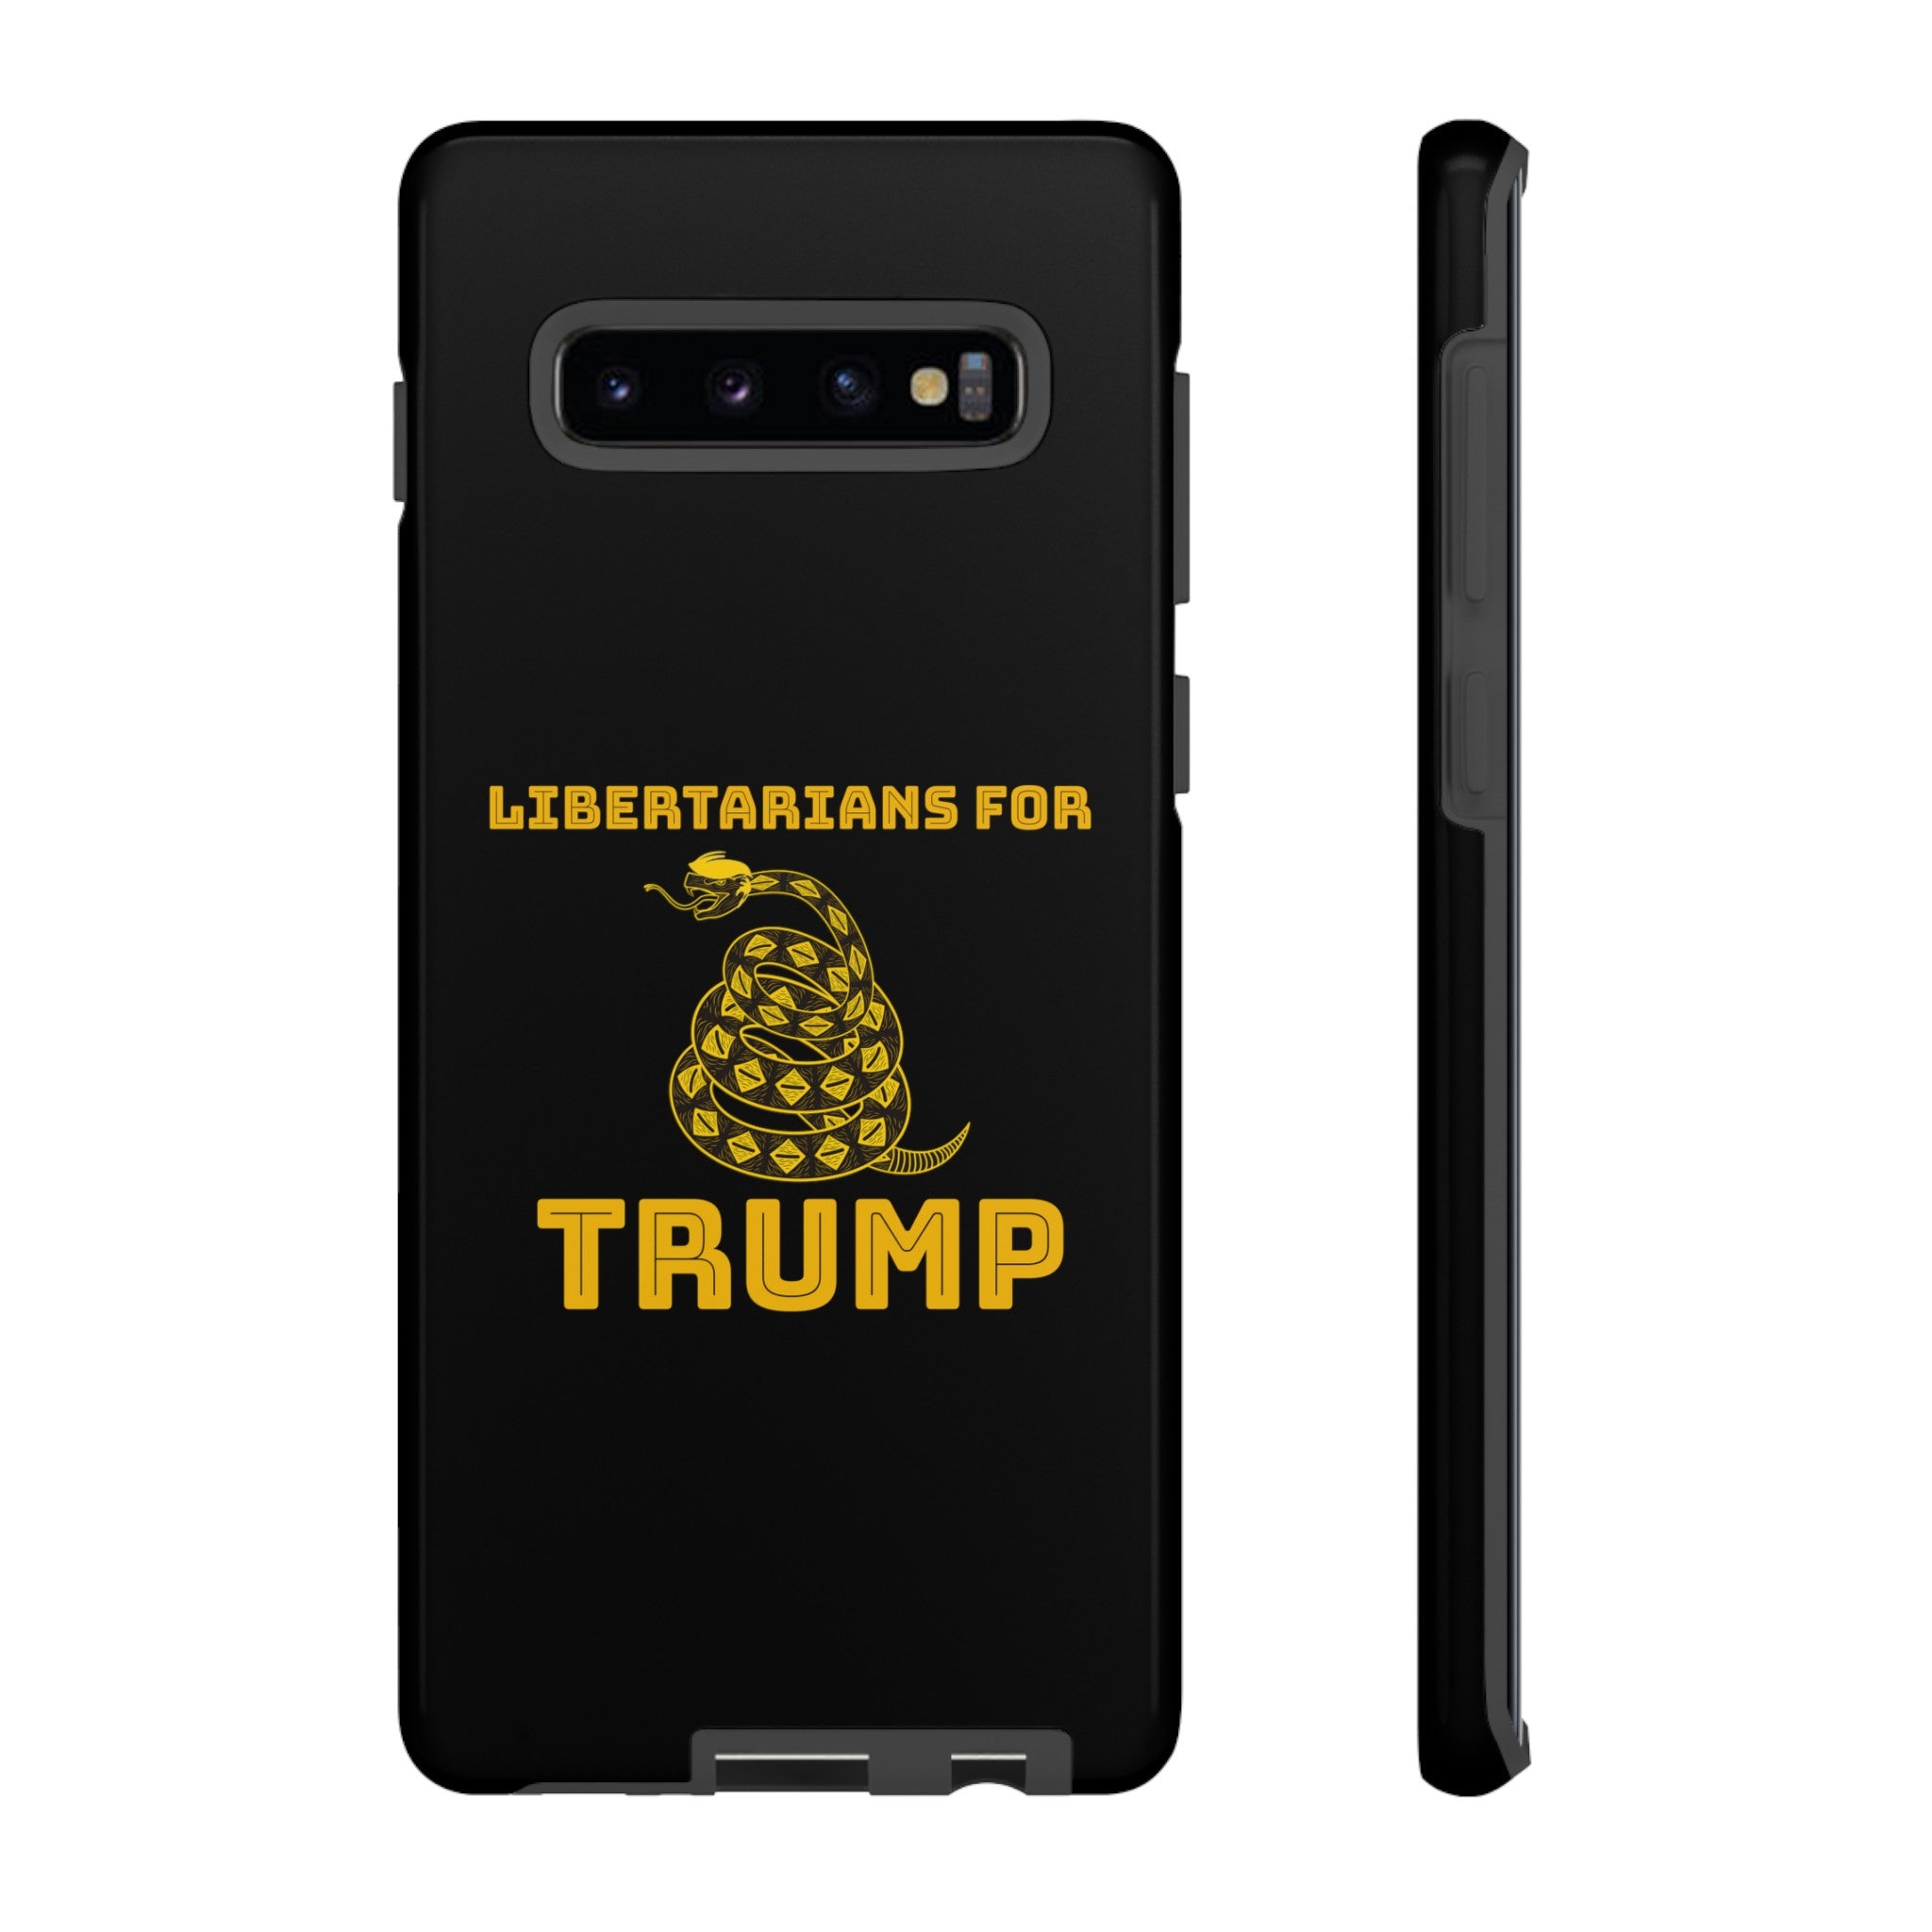 Libertarians for Trump Tough Phone Case